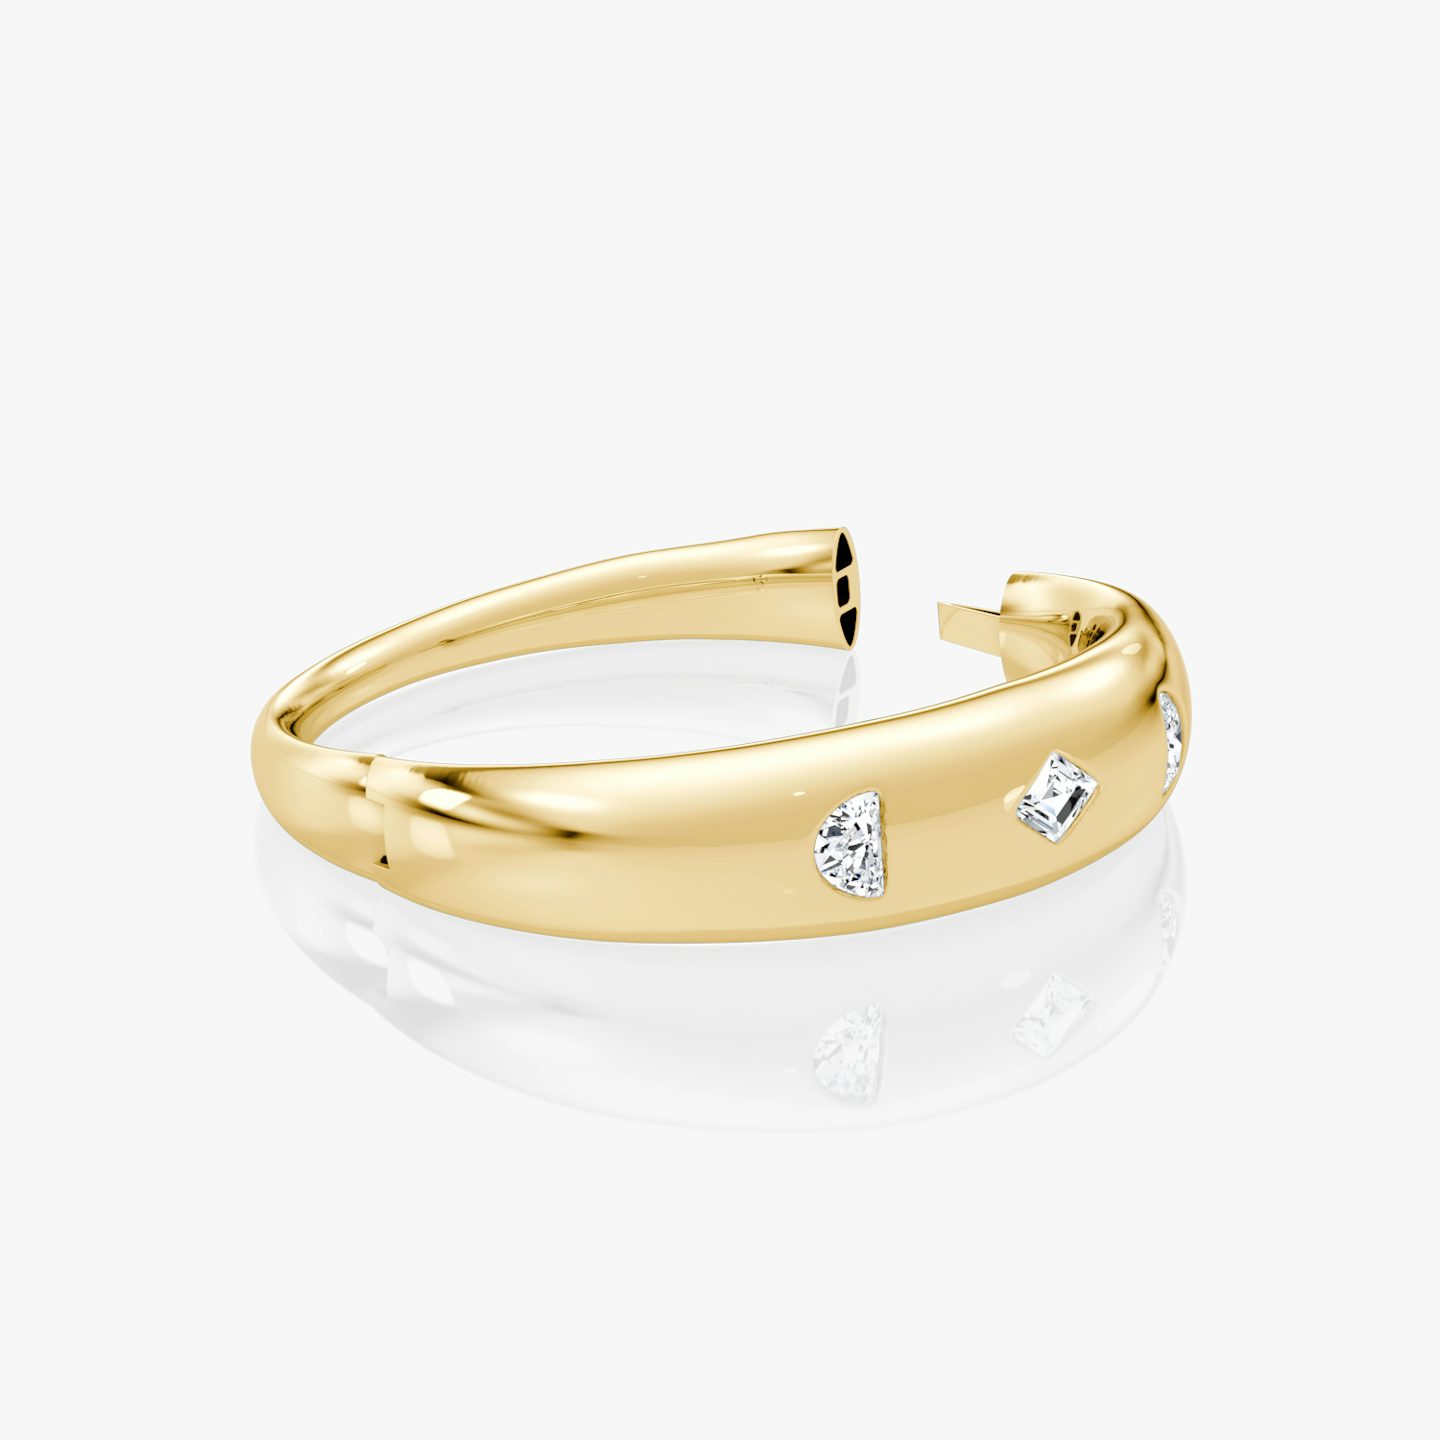 Dome Cuff Bracelet | Lozenge + Kite | 14k | 18k Yellow Gold | Wrist size: Large